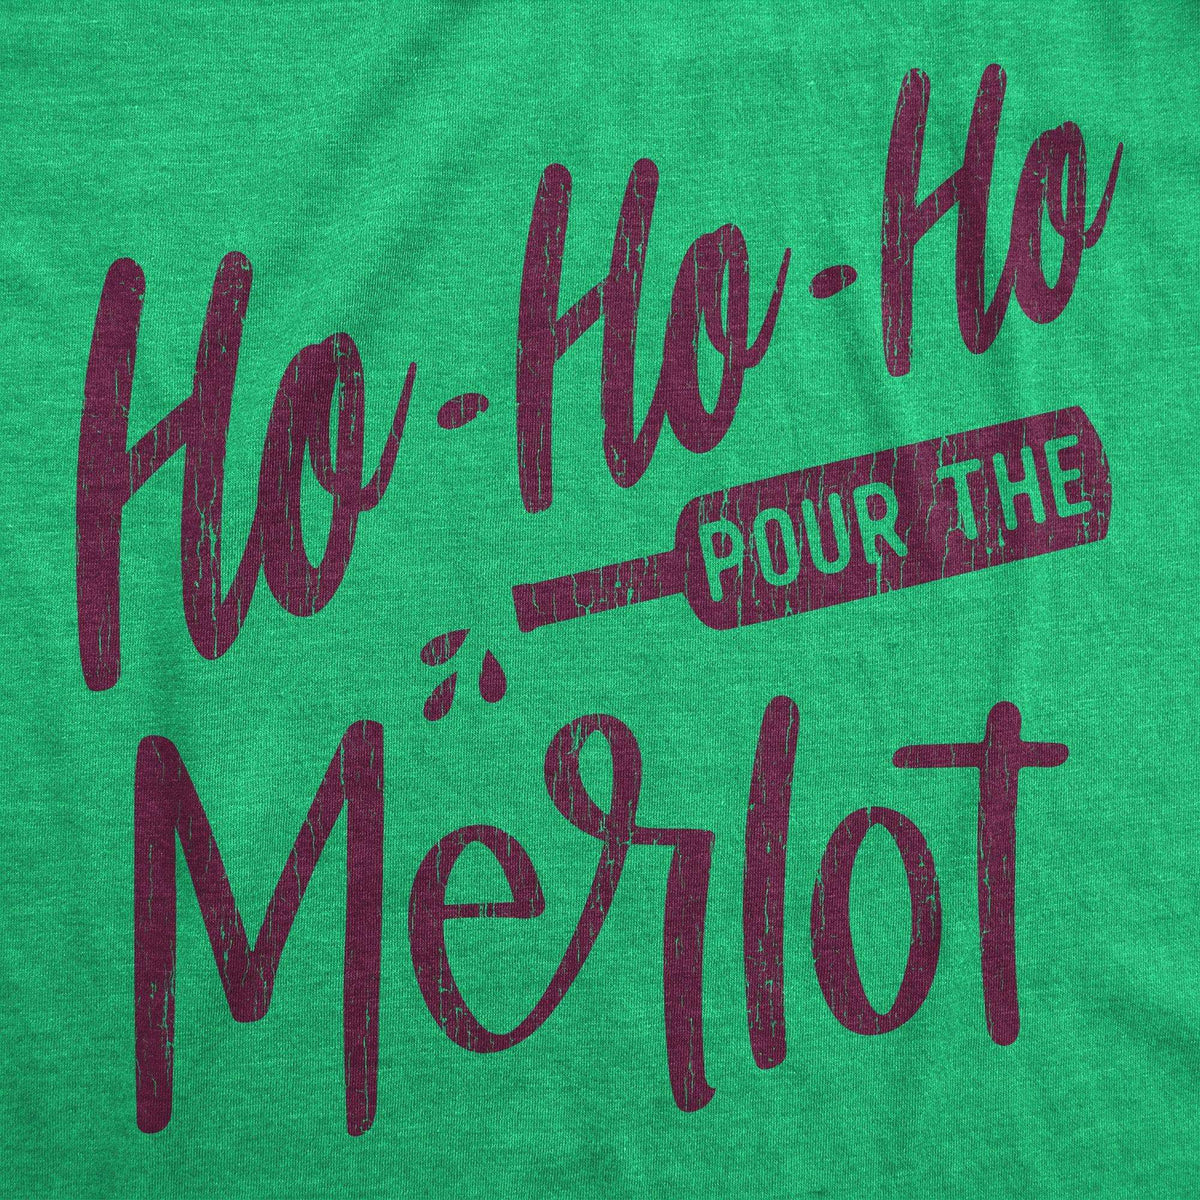 Ho Ho Ho Pour The Merlot Men&#39;s Tshirt - Crazy Dog T-Shirts